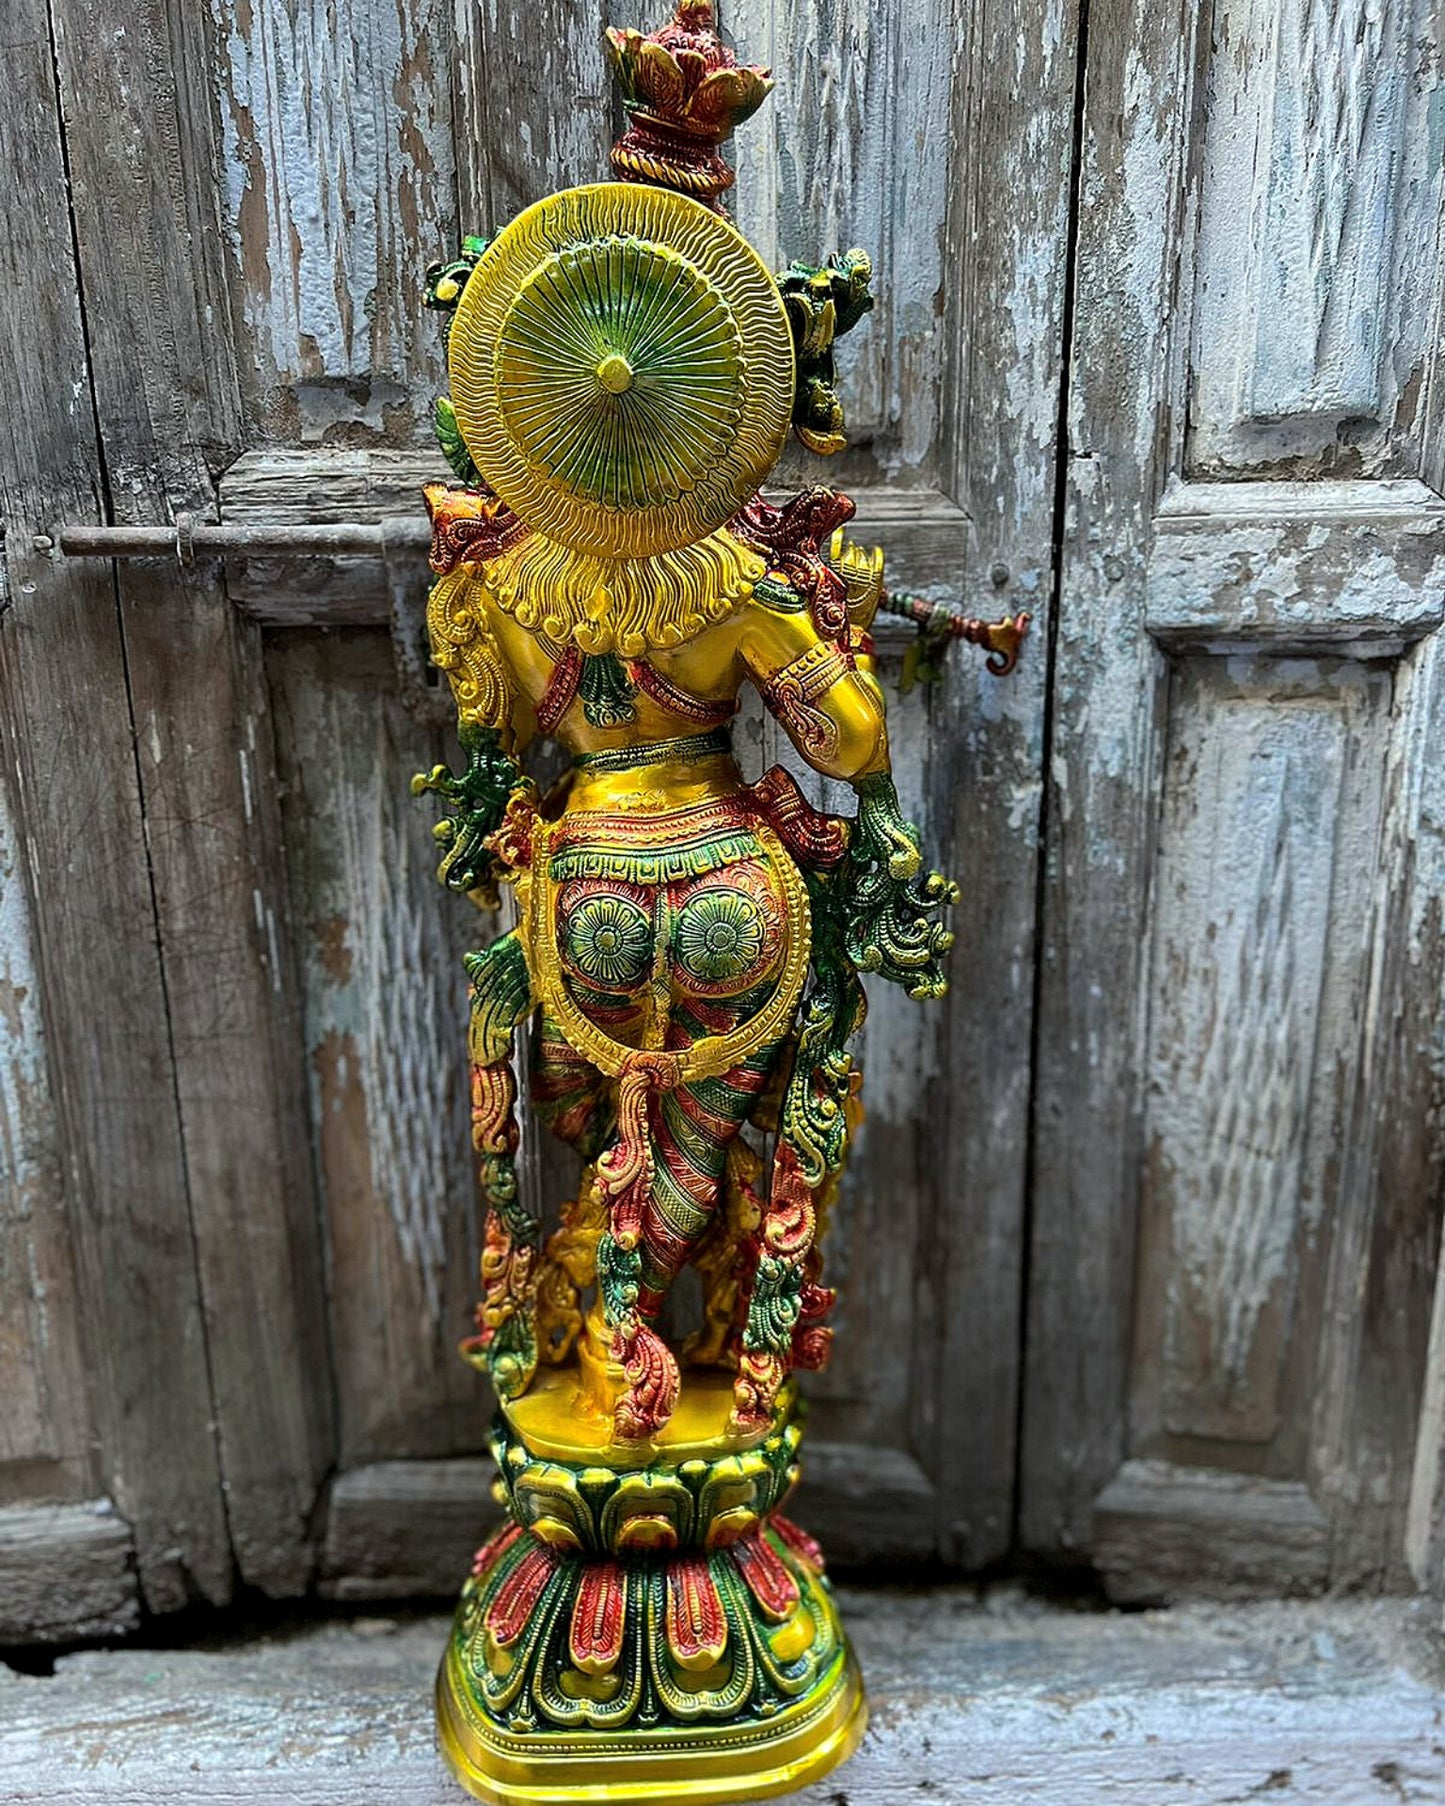 Hand-painted Brass Krishna Idol - Divine Beauty and Grace 29"